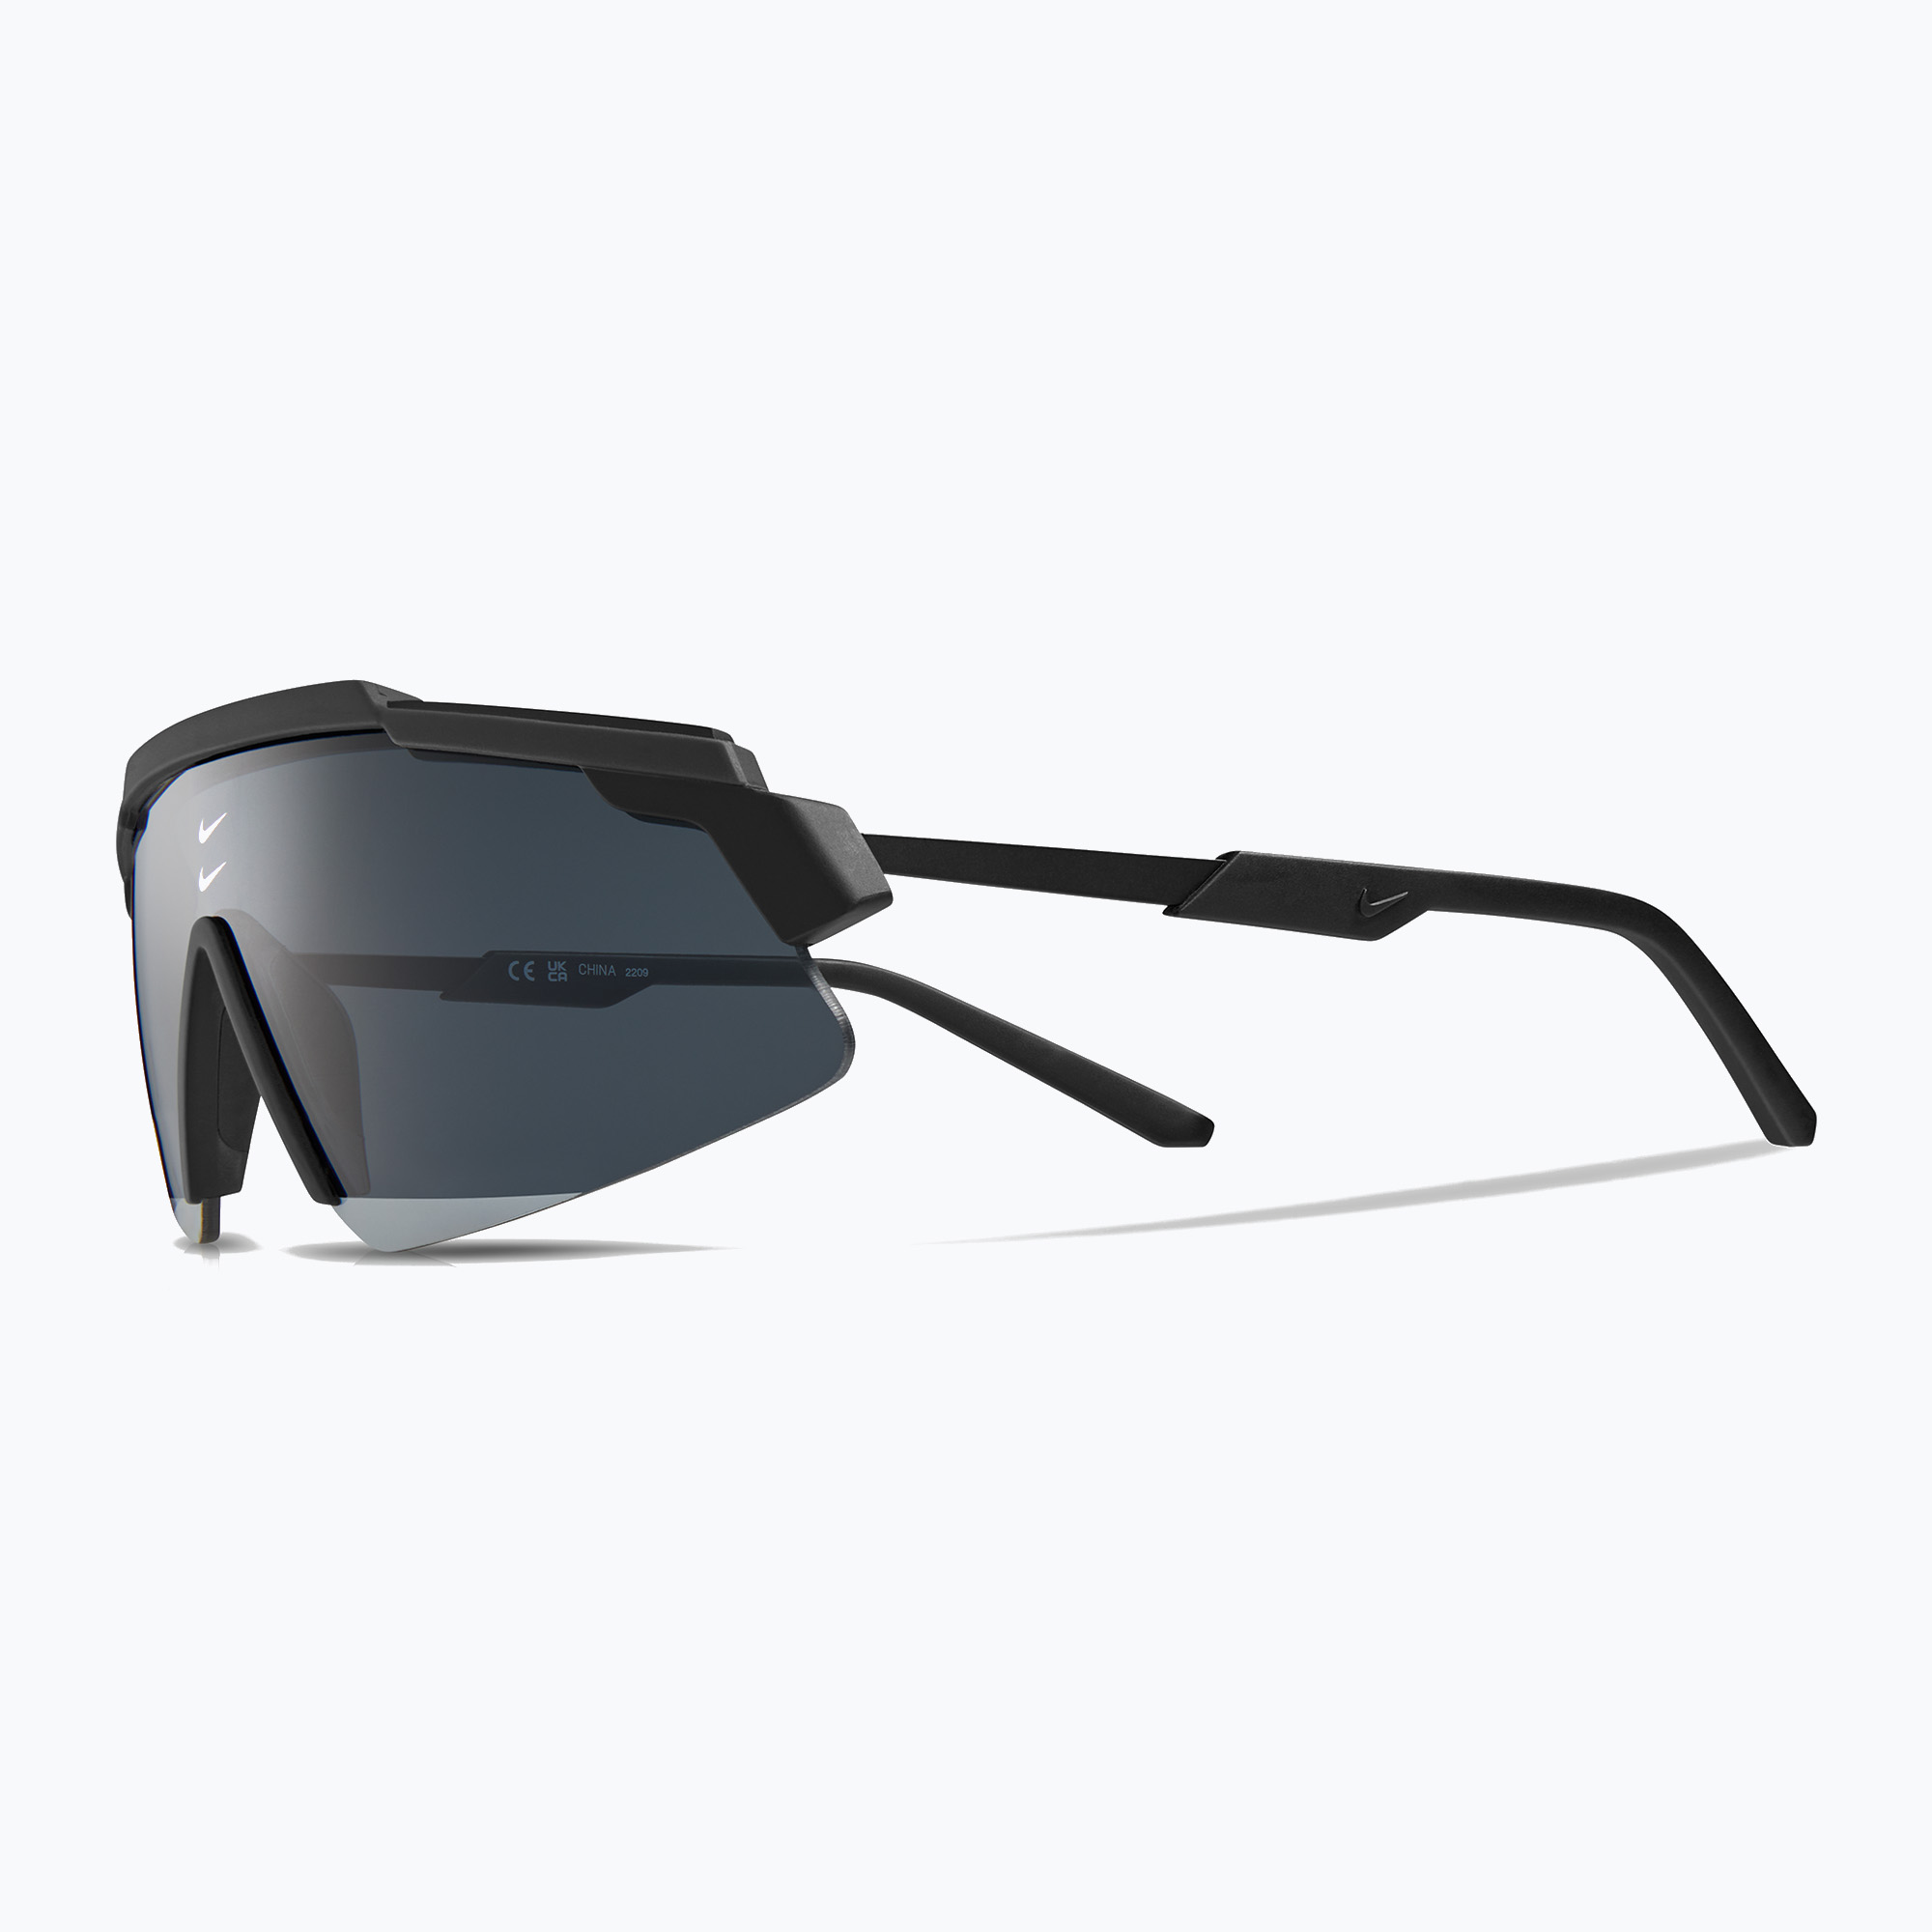 Слънчеви очила Nike Marquee тъмно сиво/тъмно сиво